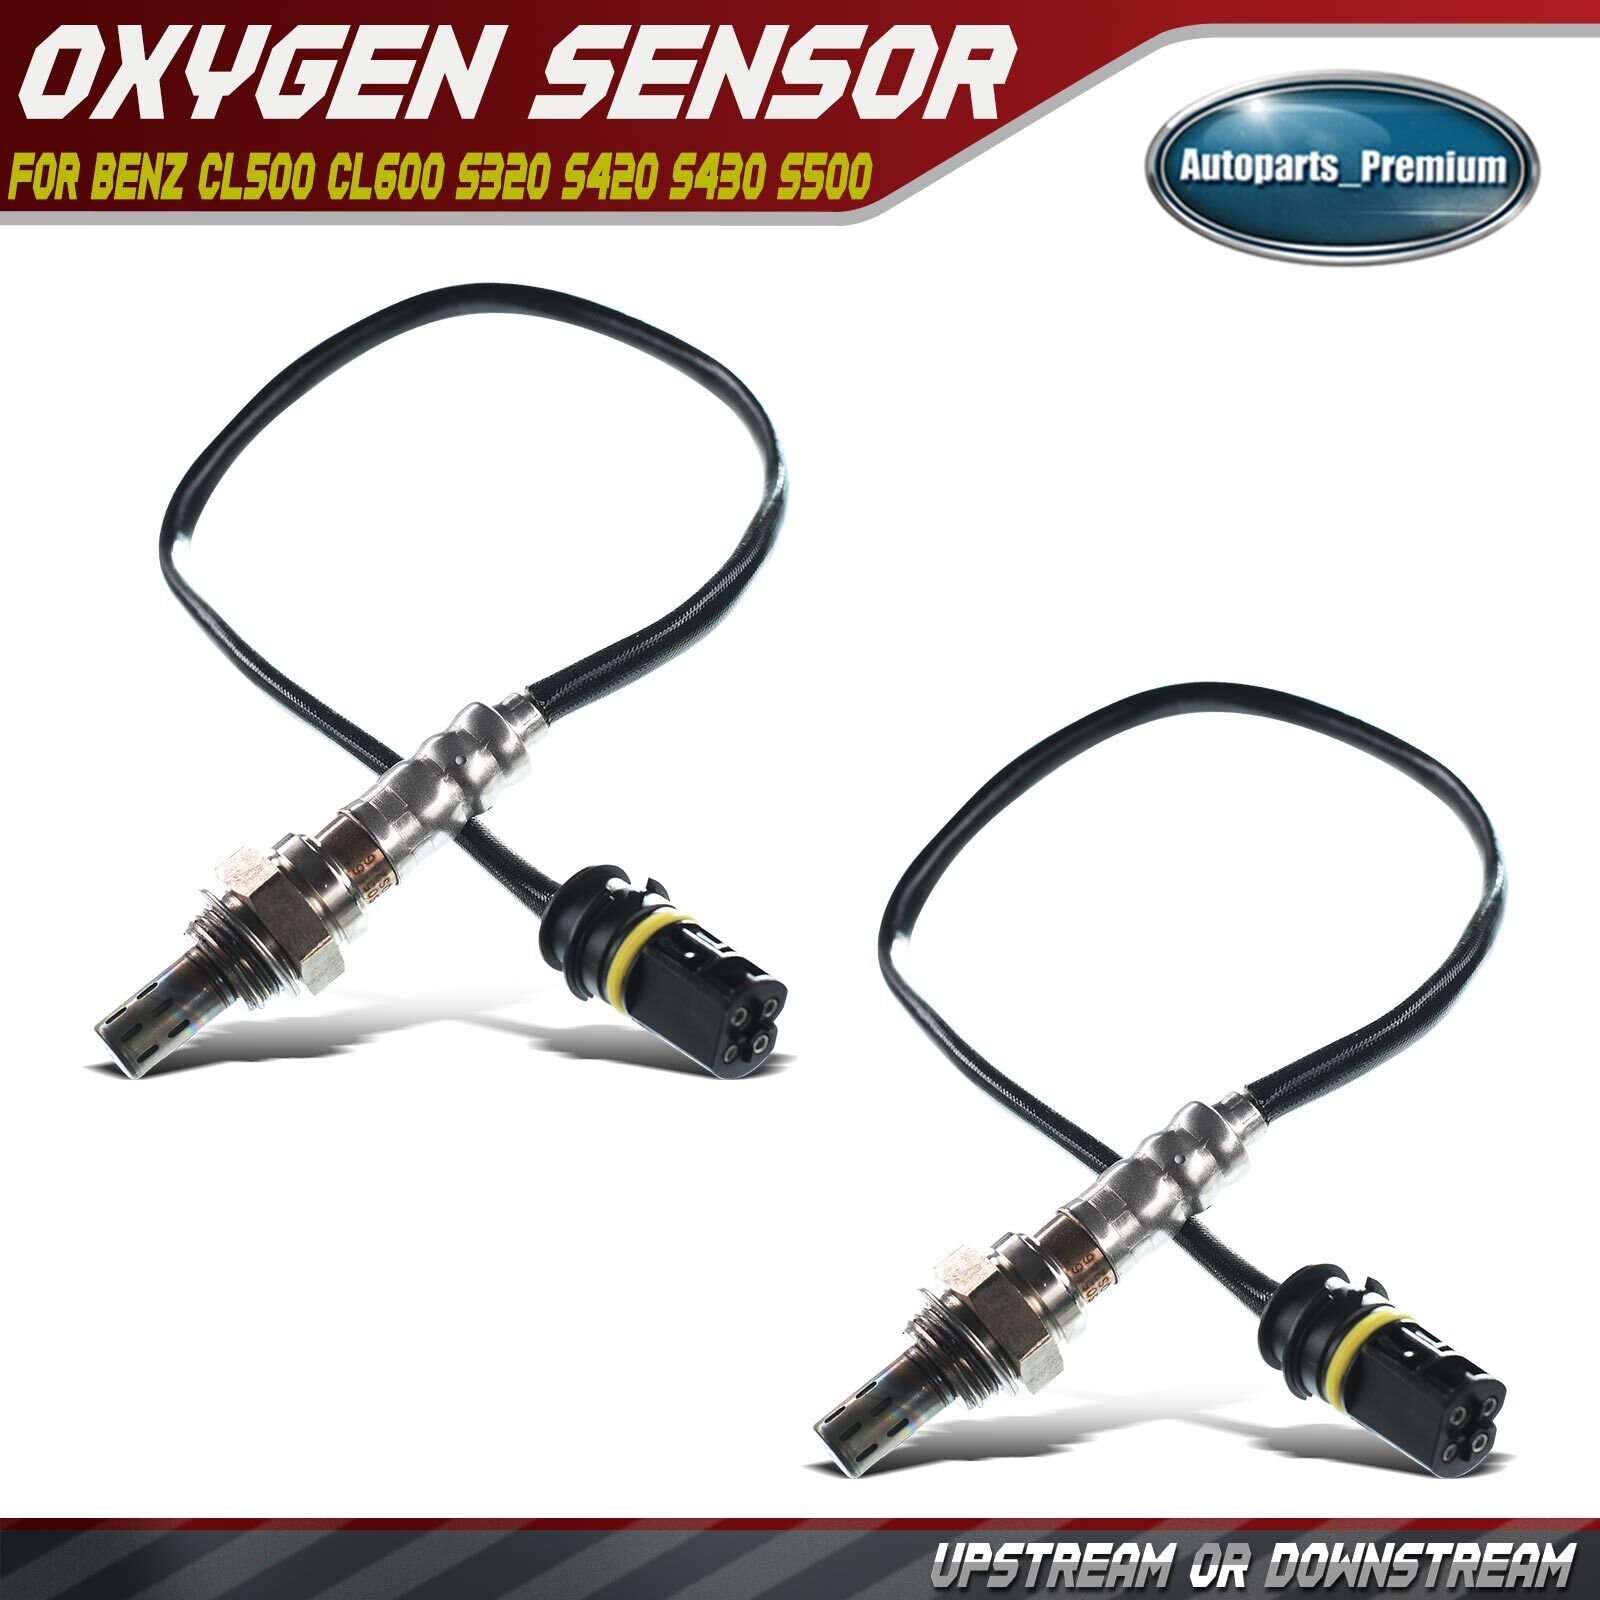 2x O2 Oxygen Sensor for Mercedes-Benz CL500 CL600 S320 S420 S430 S500 S600 SL500